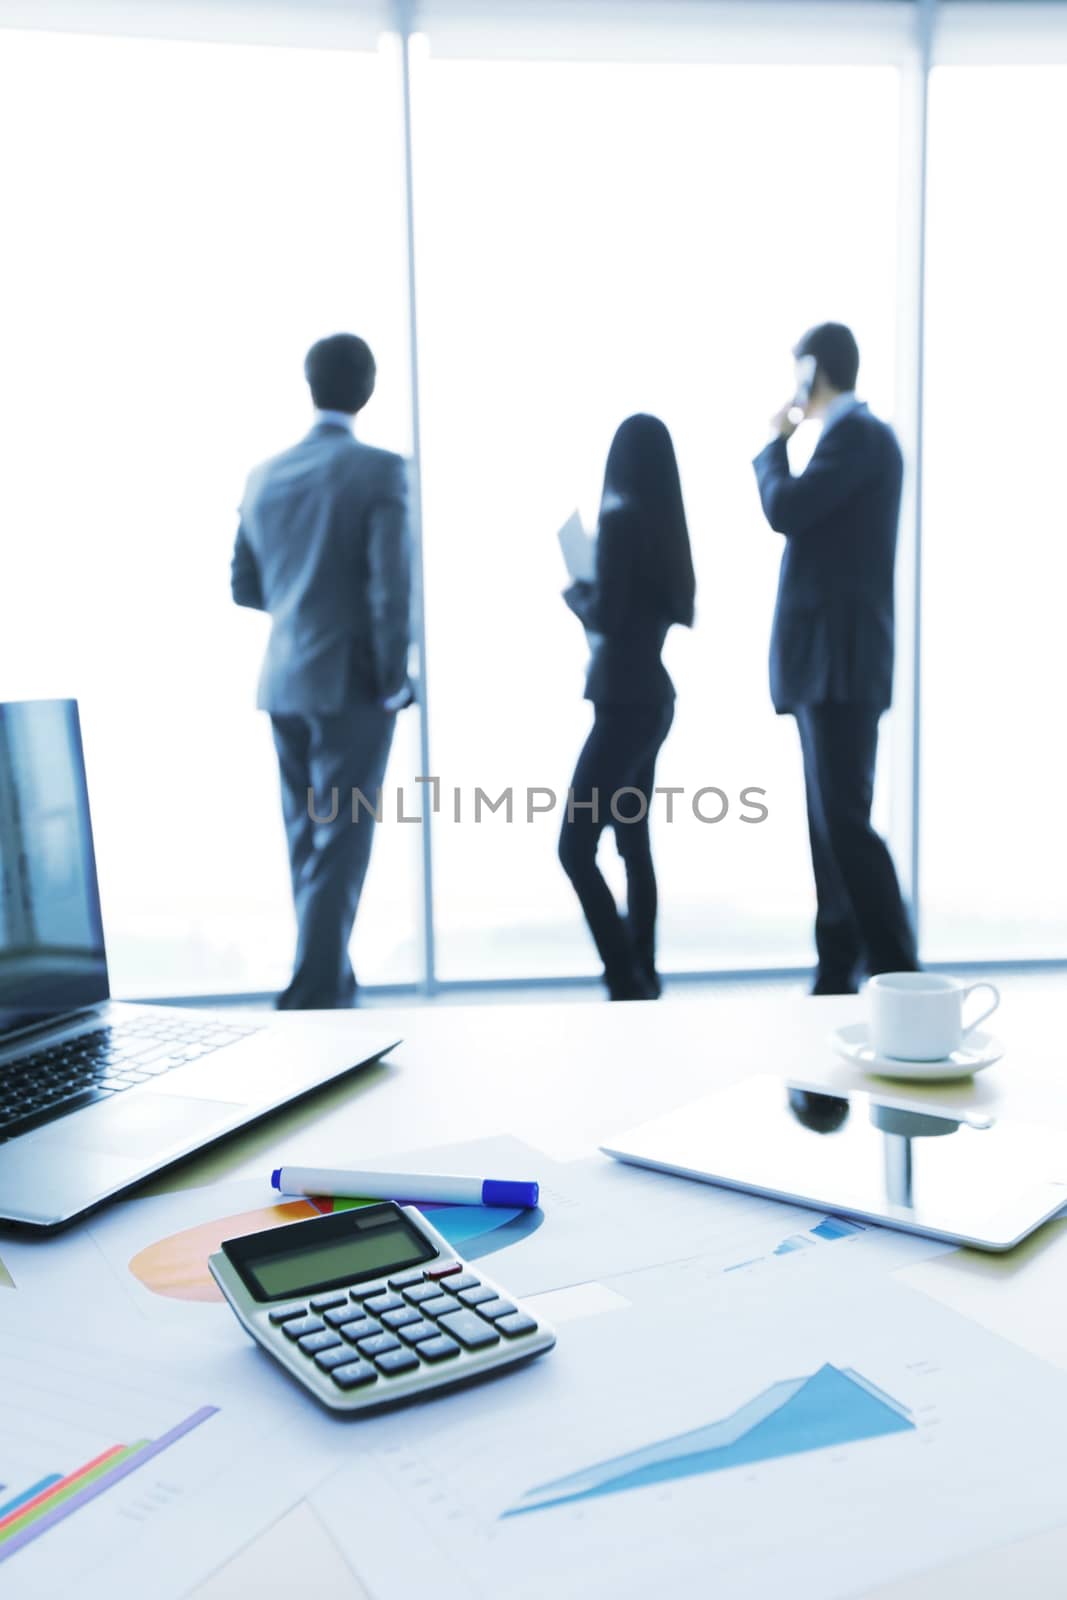 Businessmen in office by ALotOfPeople